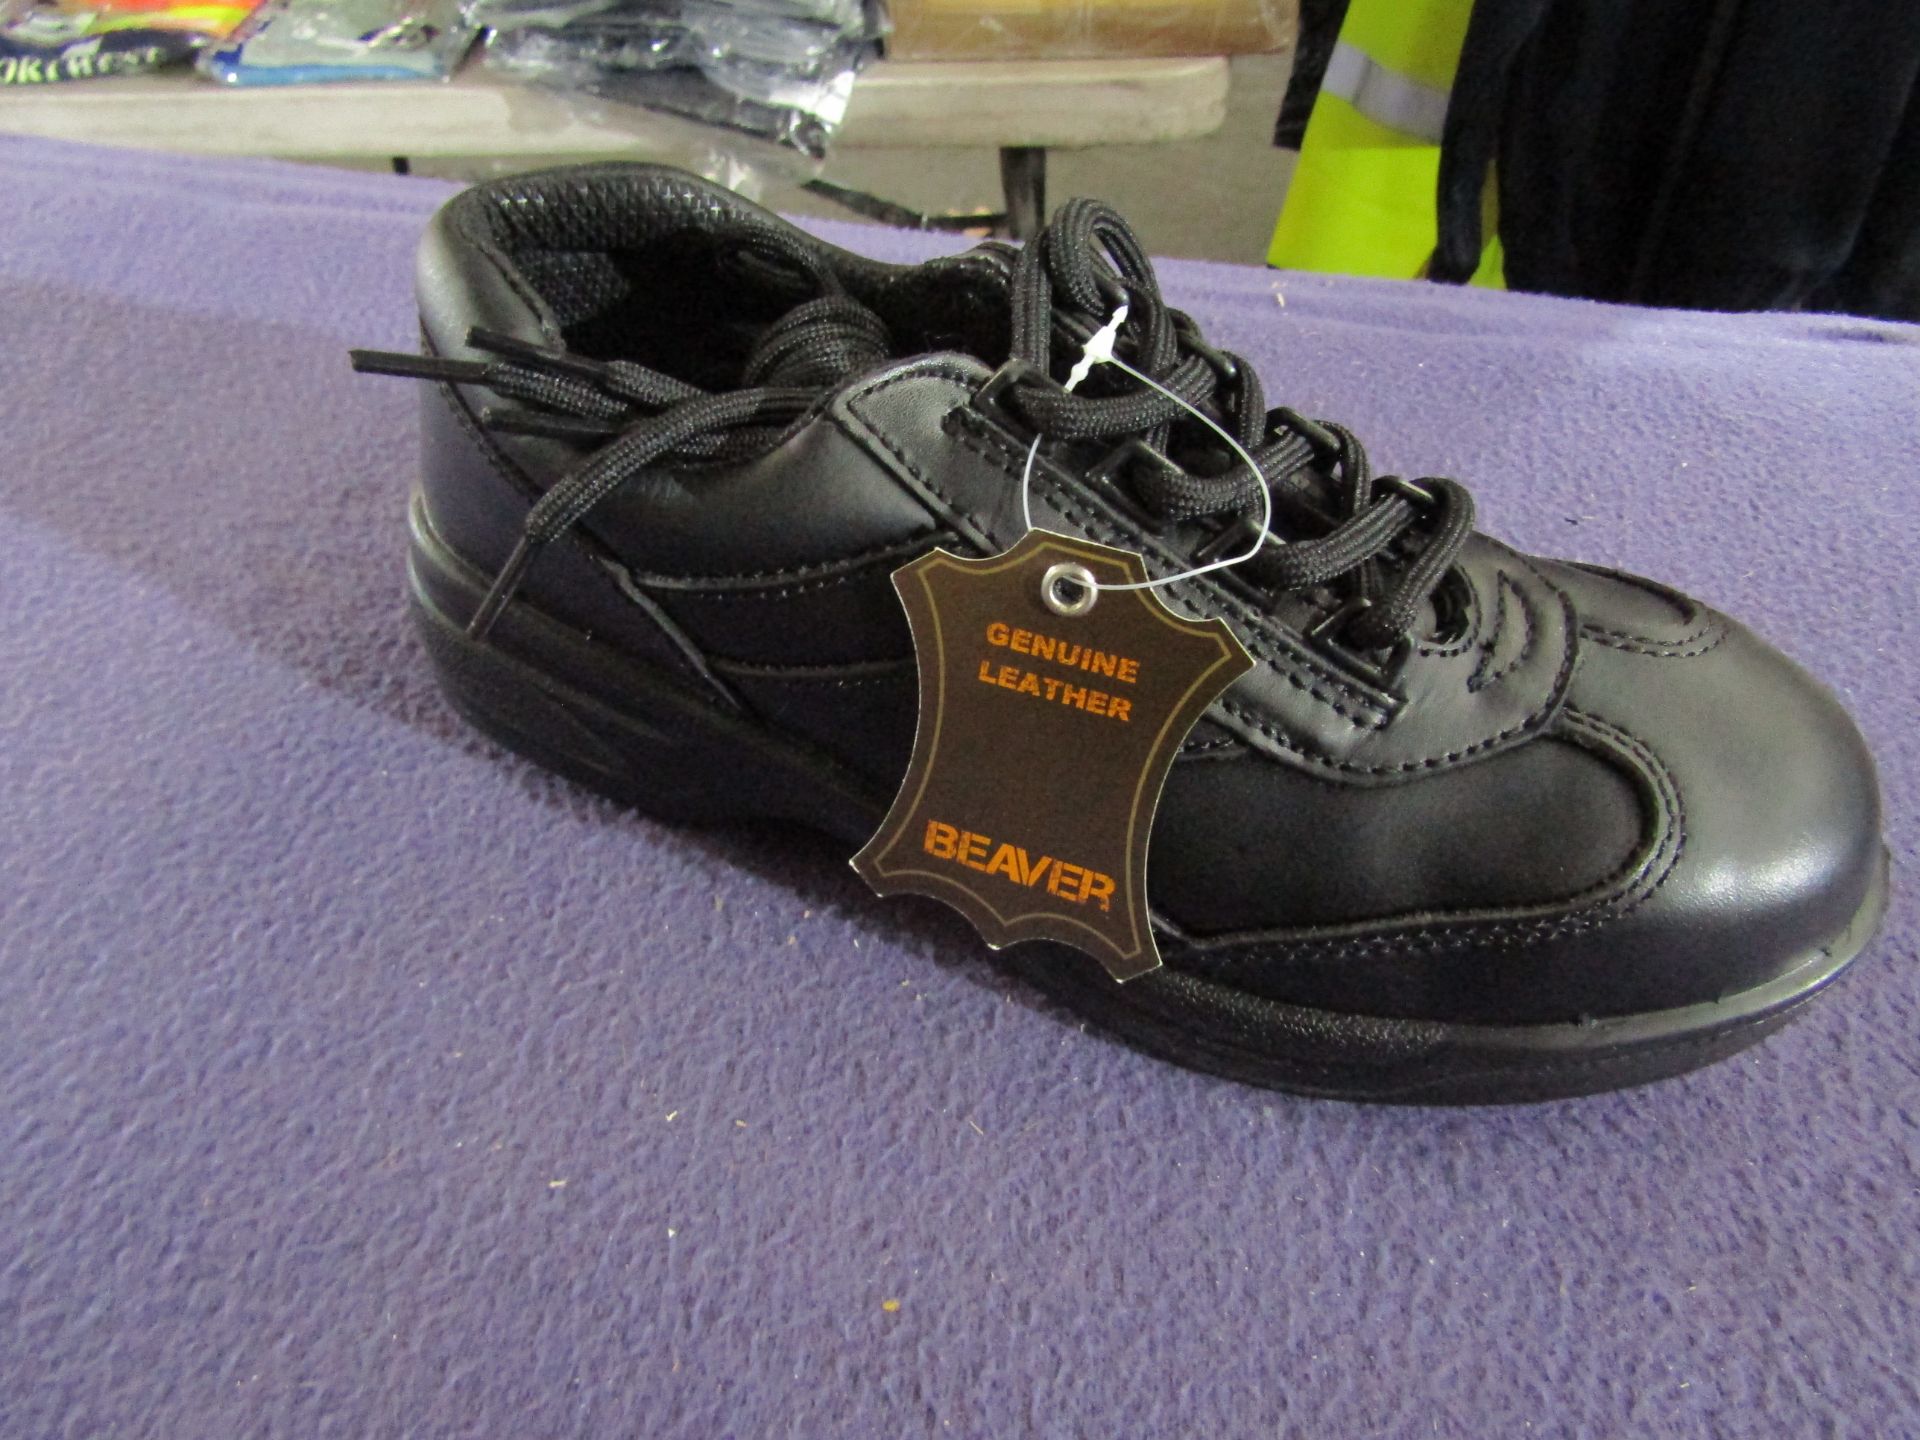 Beaver - Black Leather Steel Toe Cap Shoes - Size 5 - Unused & Boxed.